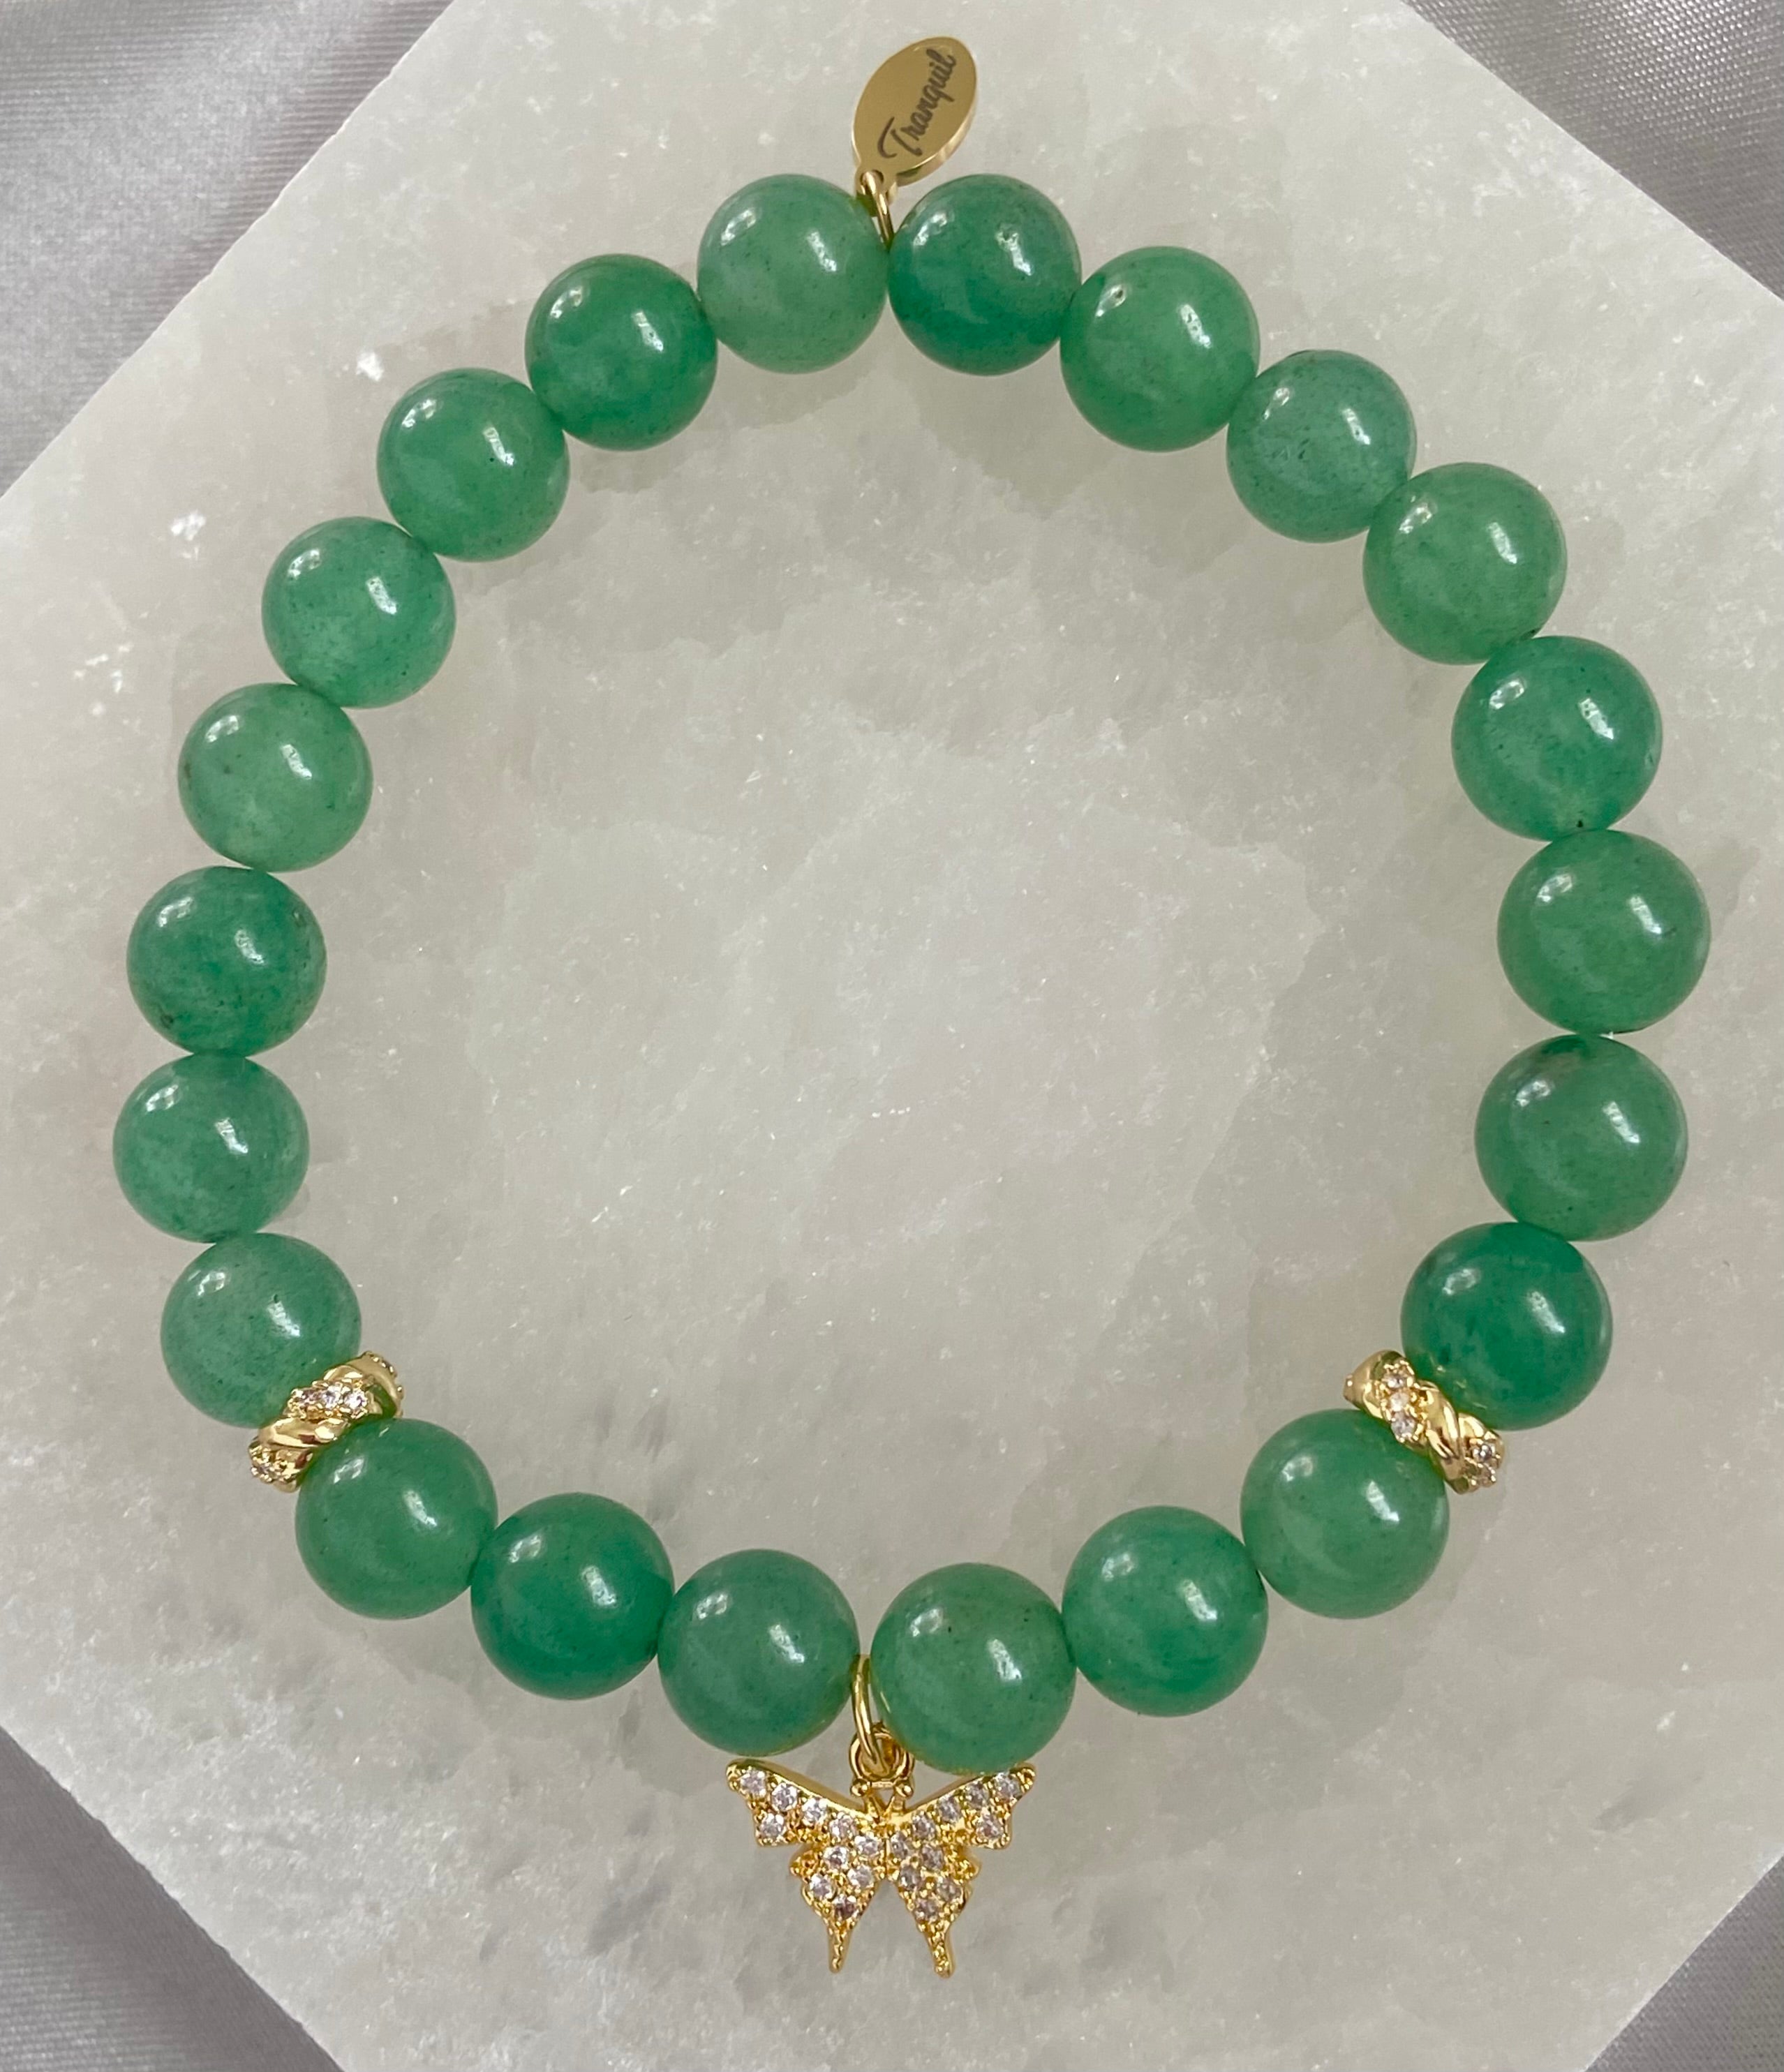 Burmese Jade Gold-Filled Butterfly Bracelet